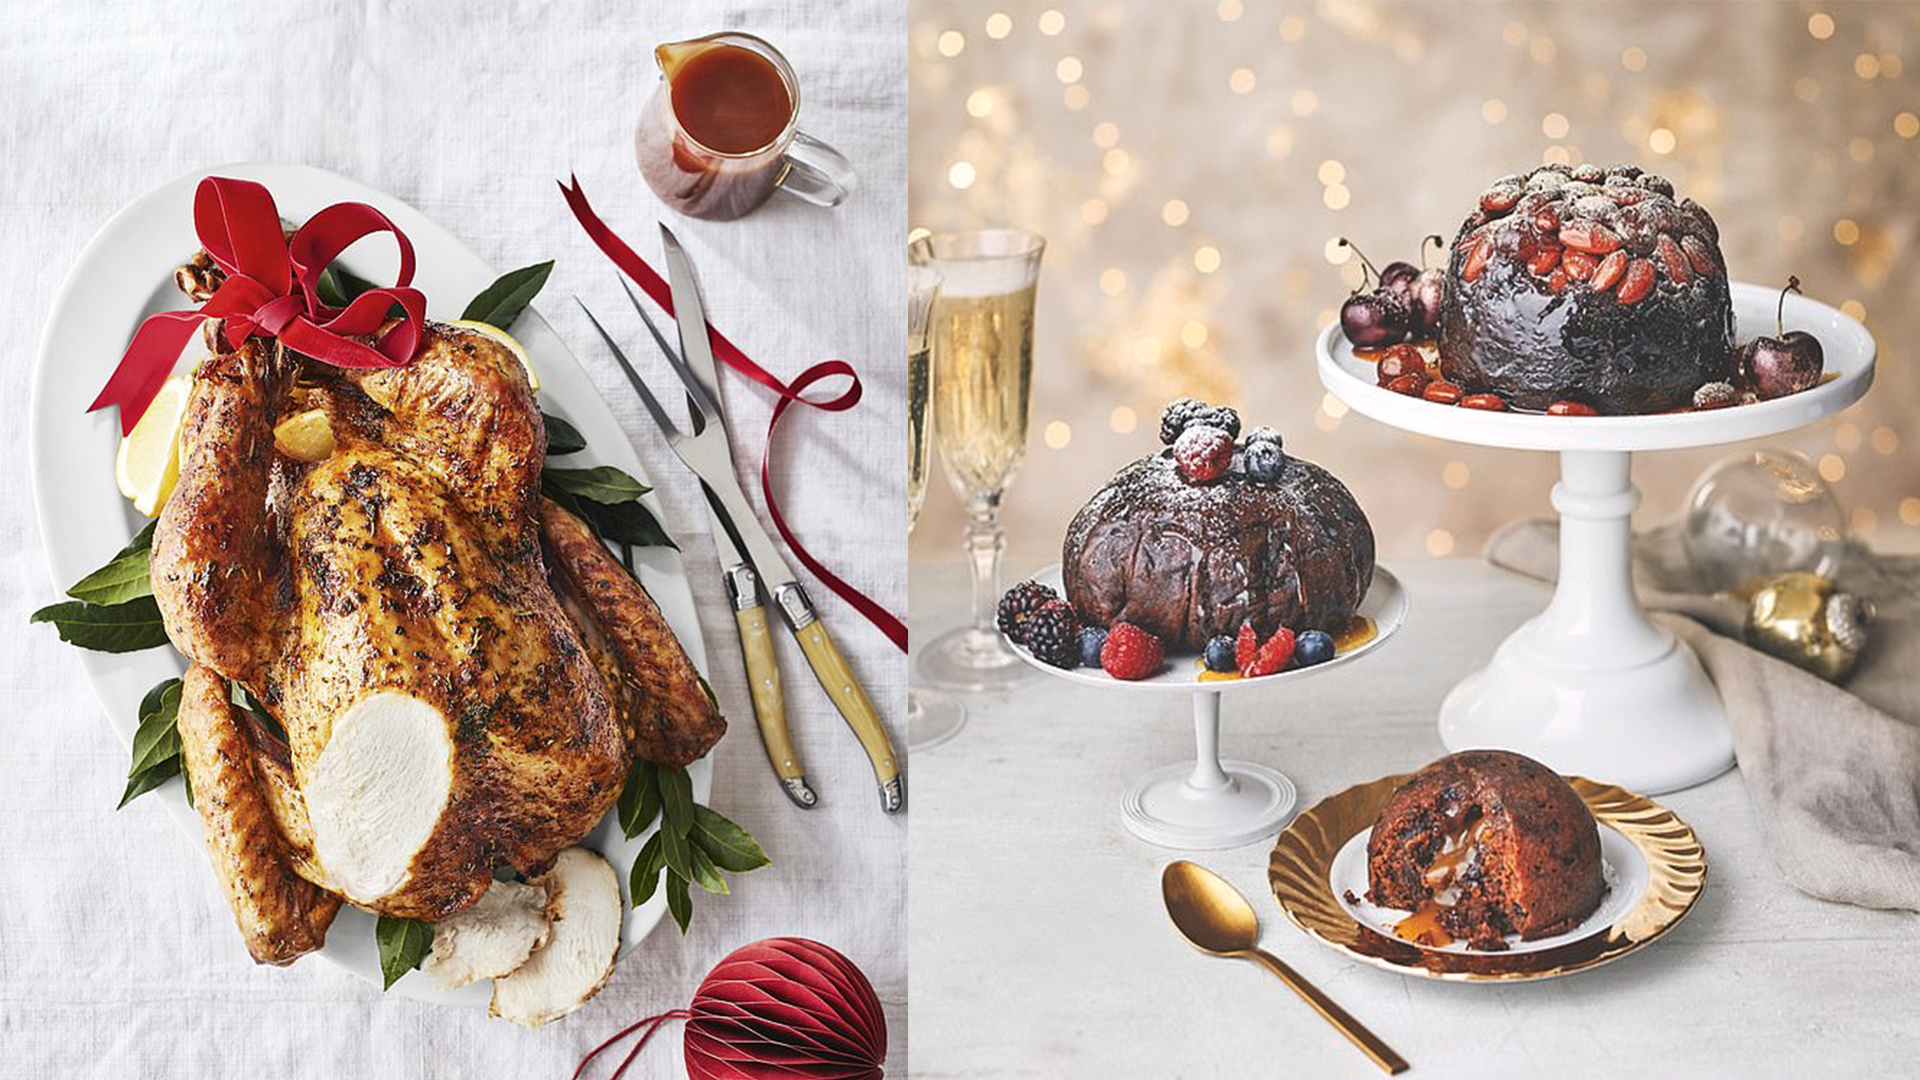 Aldi Release Their Christmas Range Including Stuffed Turkey & Champagne